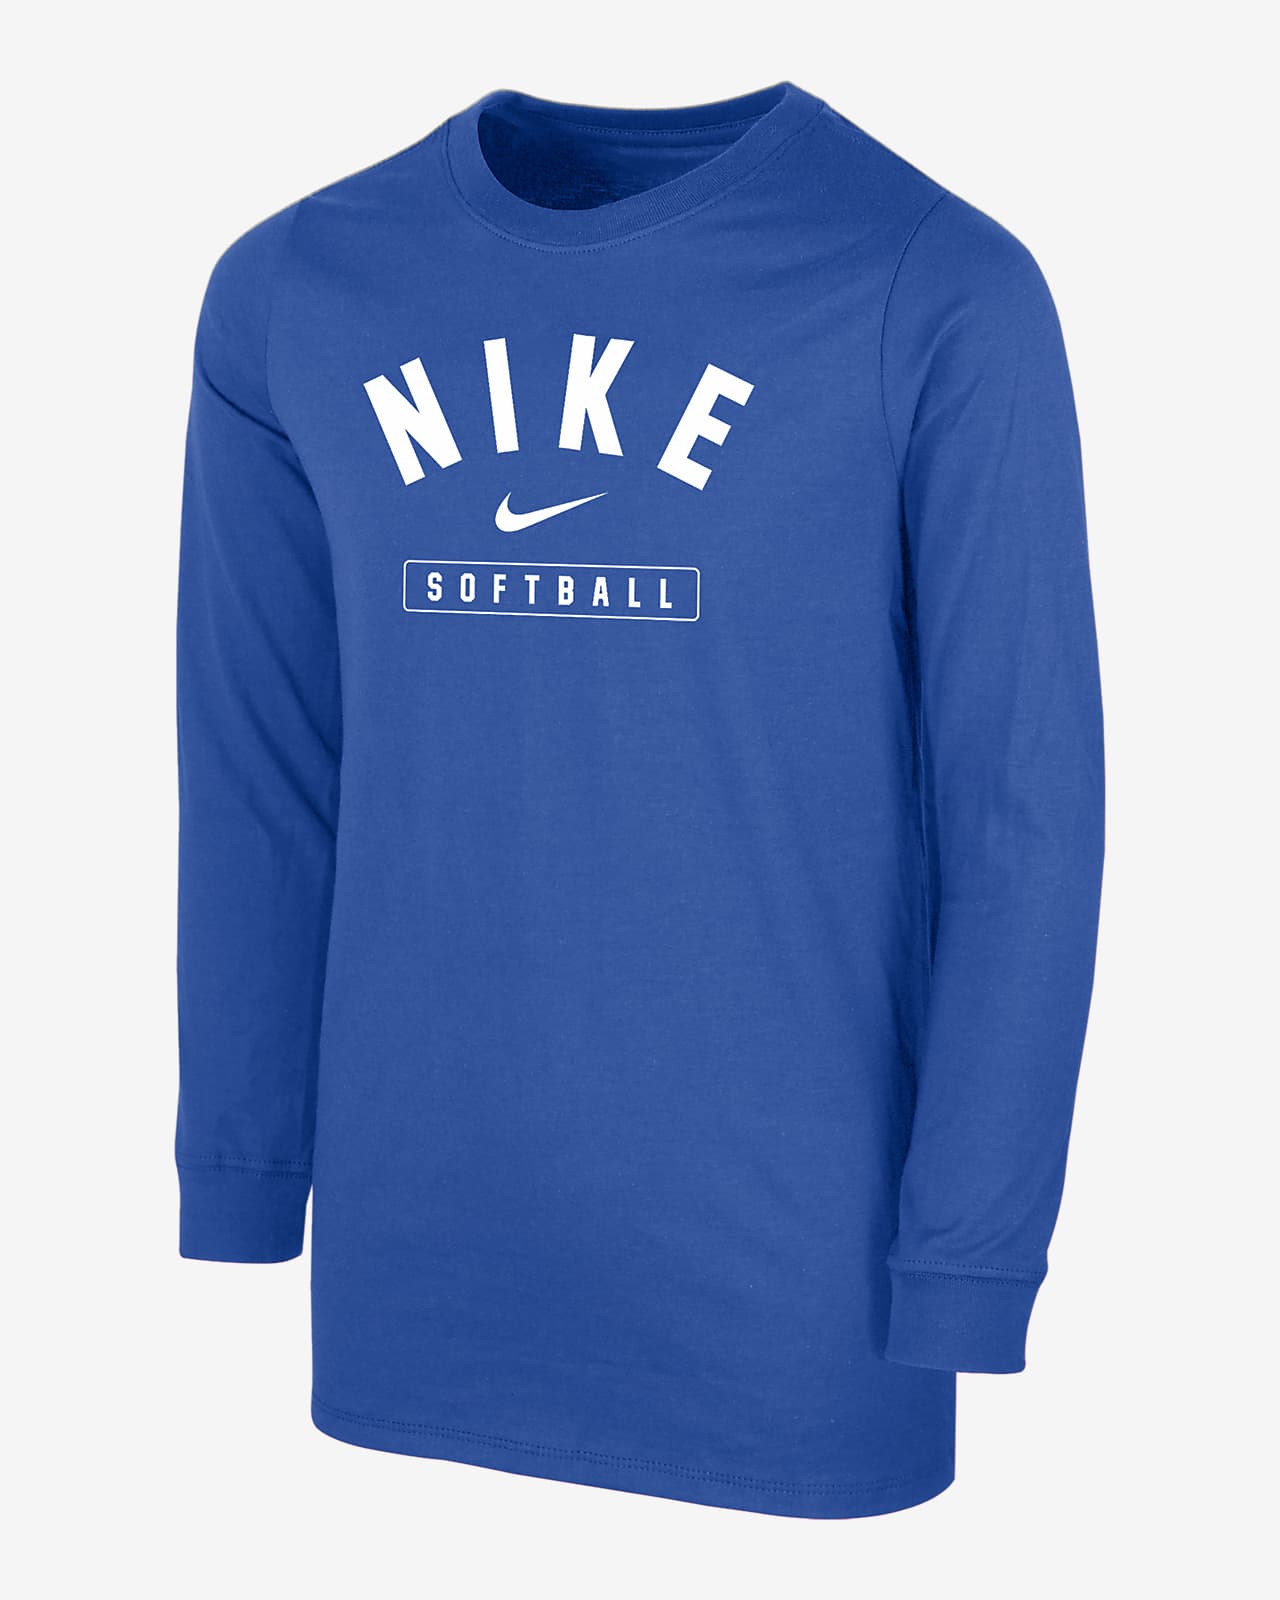 Nike Big Kids' Softball Long-Sleeve T-Shirt